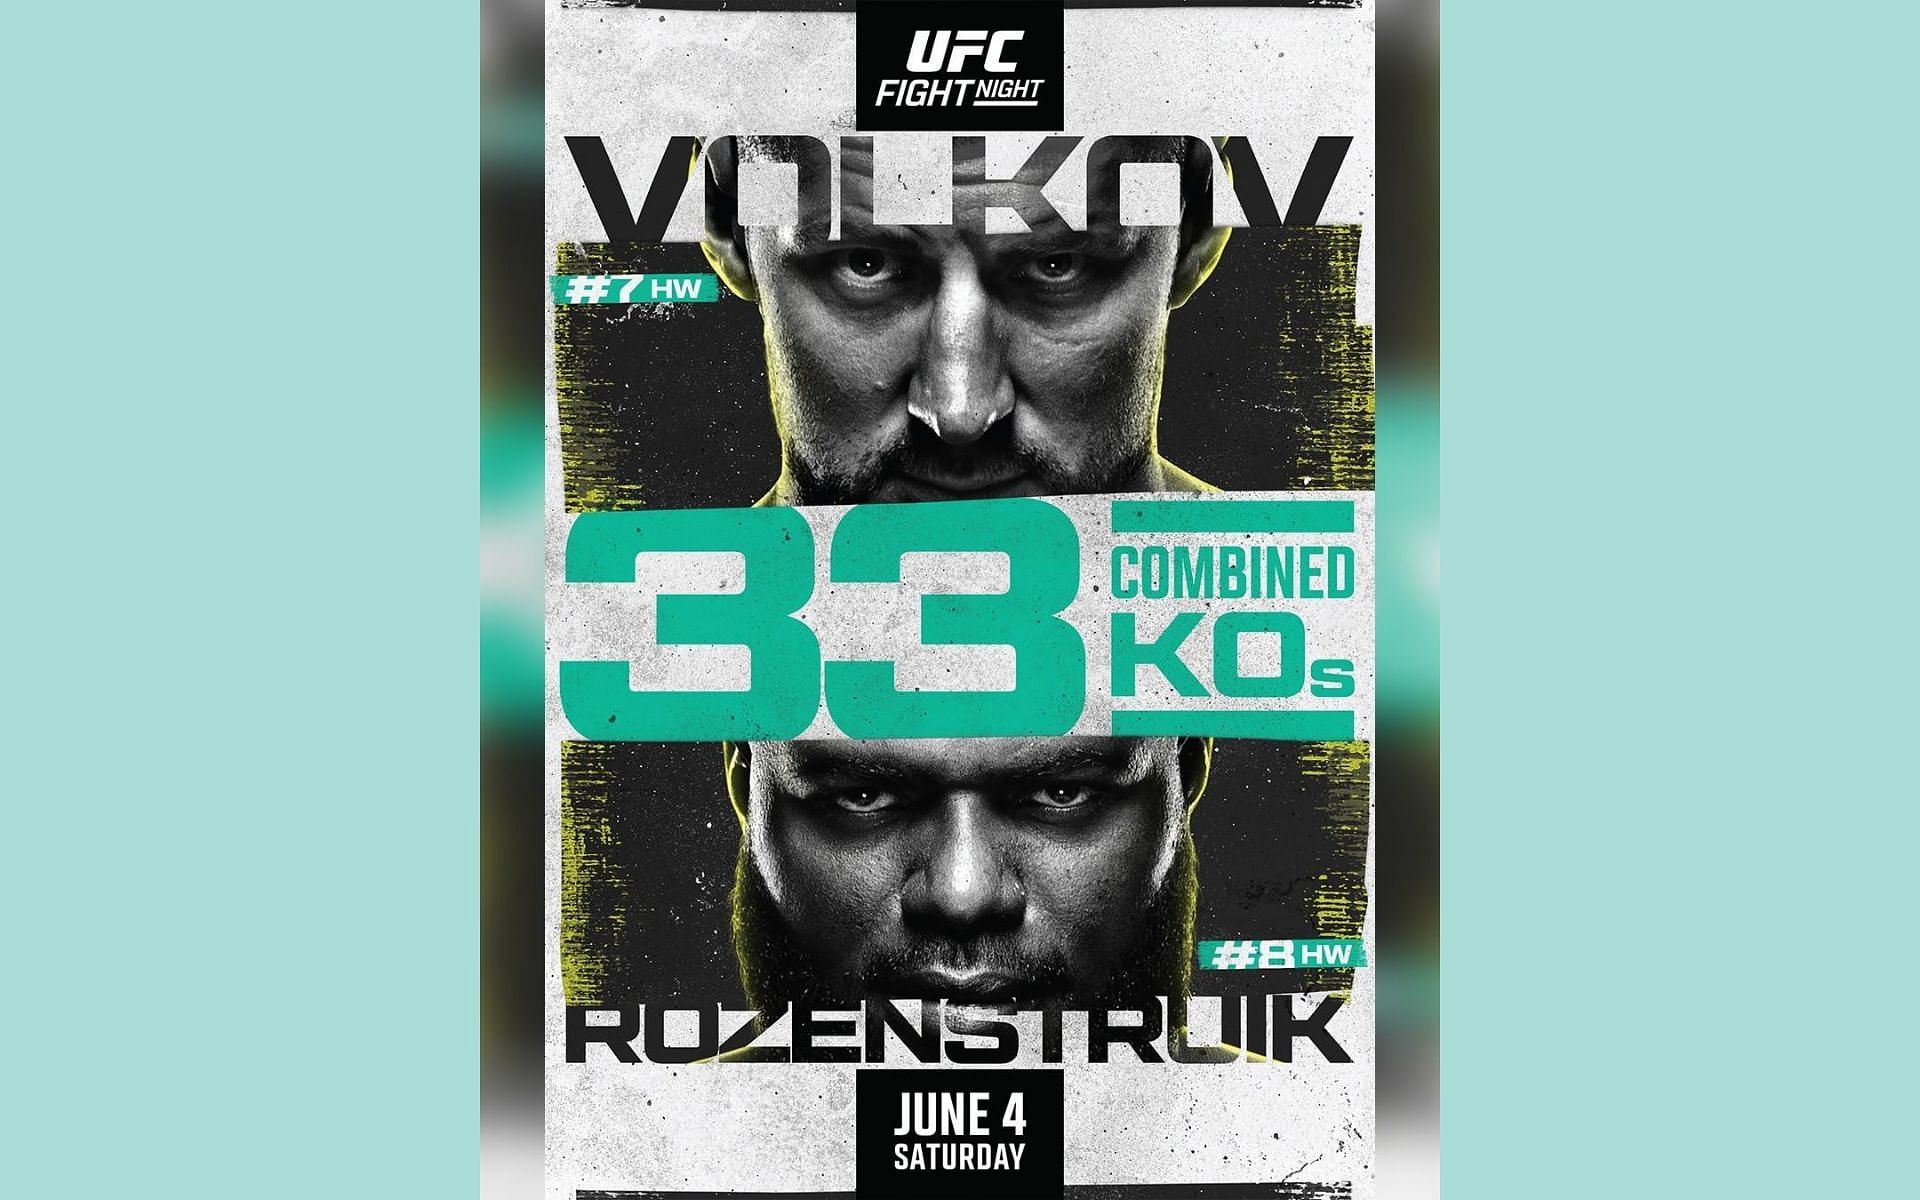 Alexander Volkov vs. Jairzinho Rozenstruik (Photo from @UFC via Instagram)